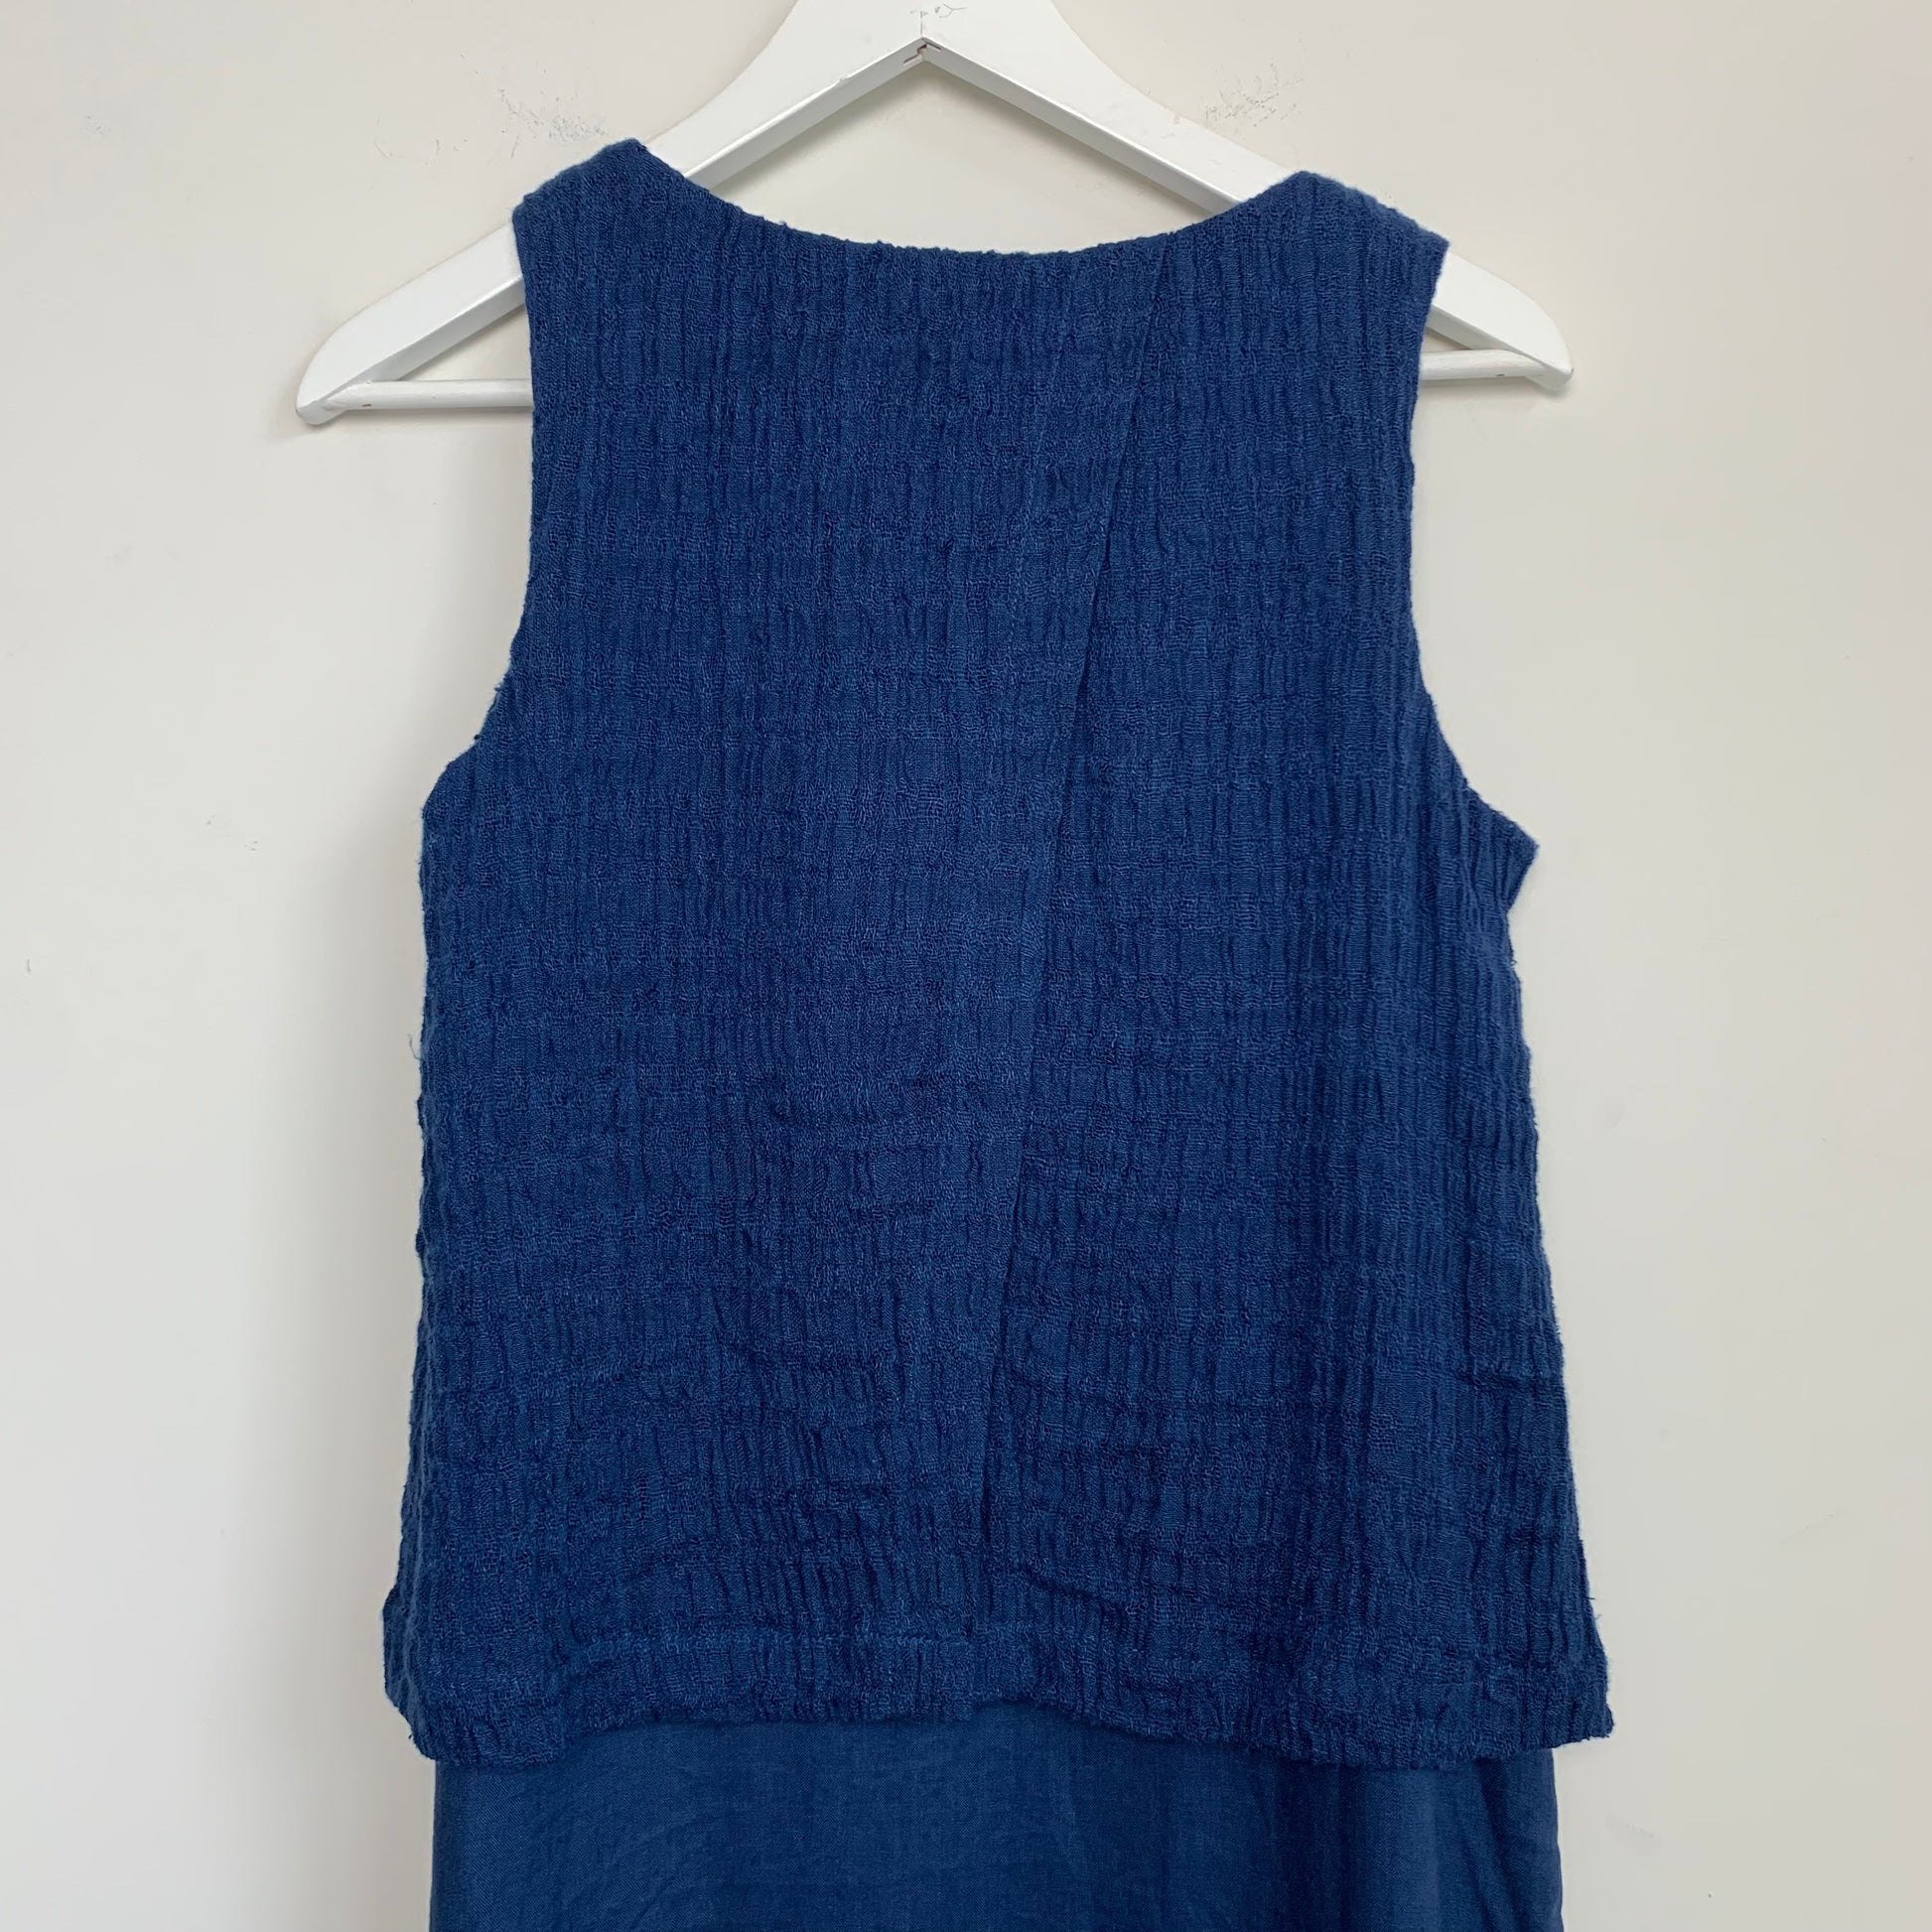 J.Jill Love Linen Blue Sleeveless Midi Dress with Knit Top XS Petite